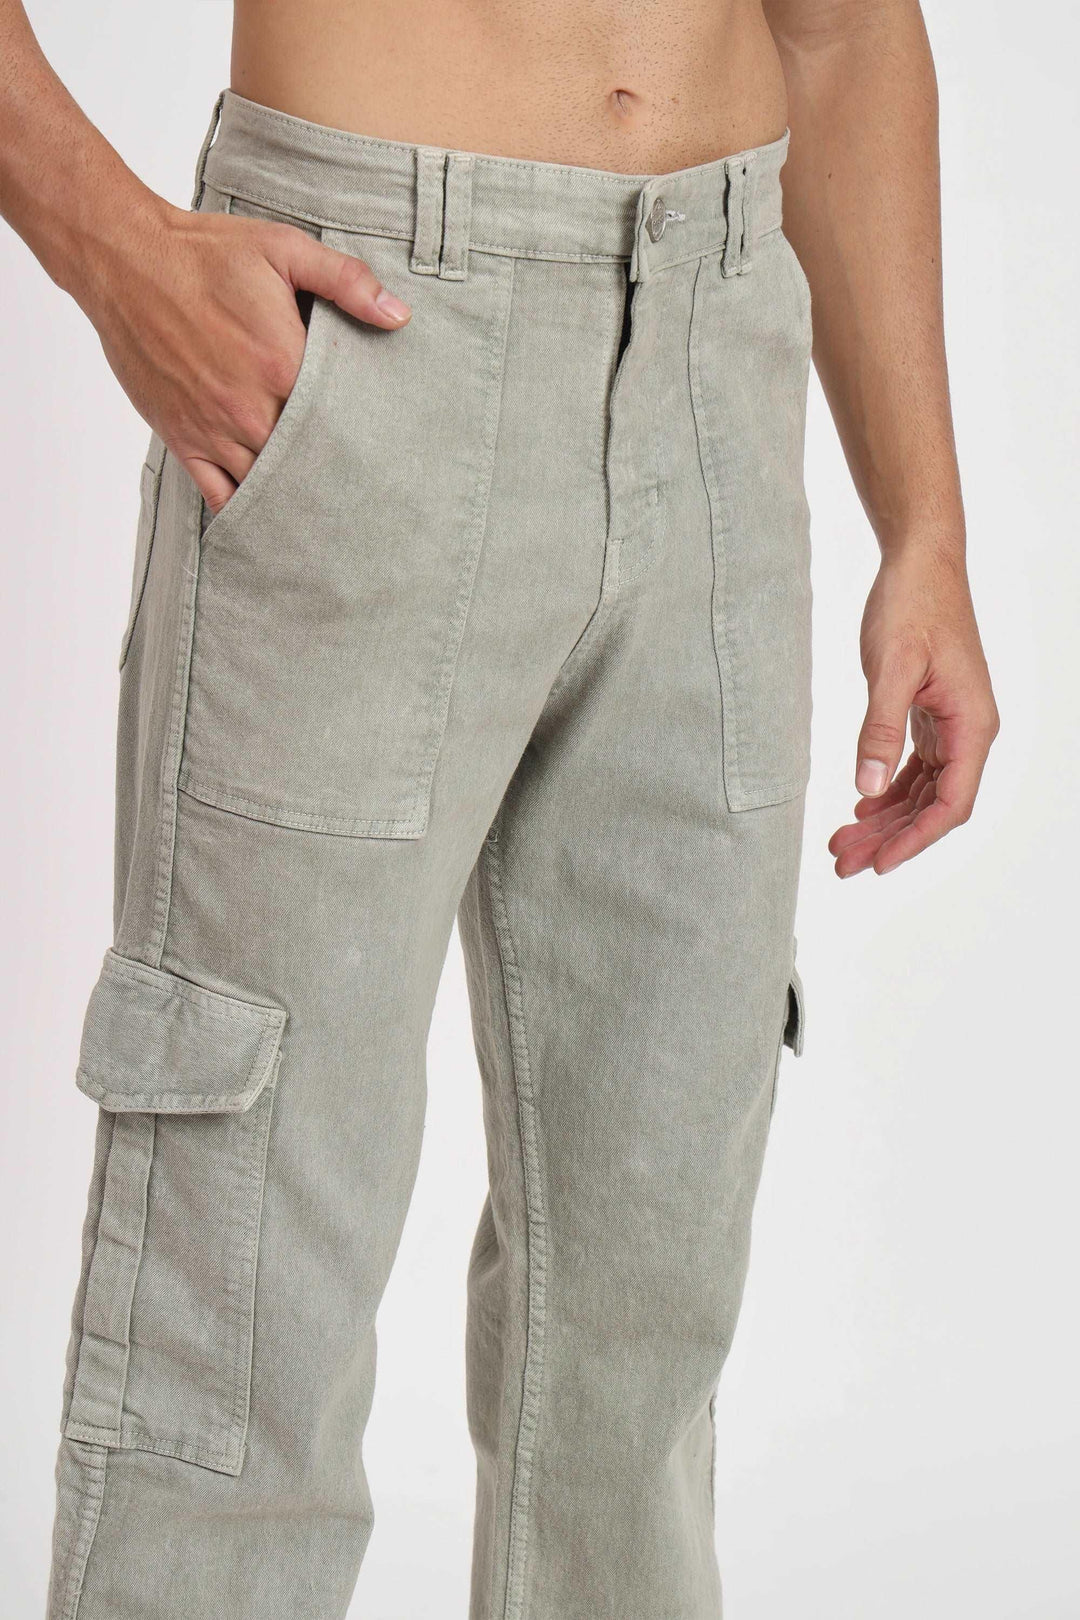 Men's Loose Fit Multiple Pocket Grey Denim Cargo Pant - Peplos Jeans 